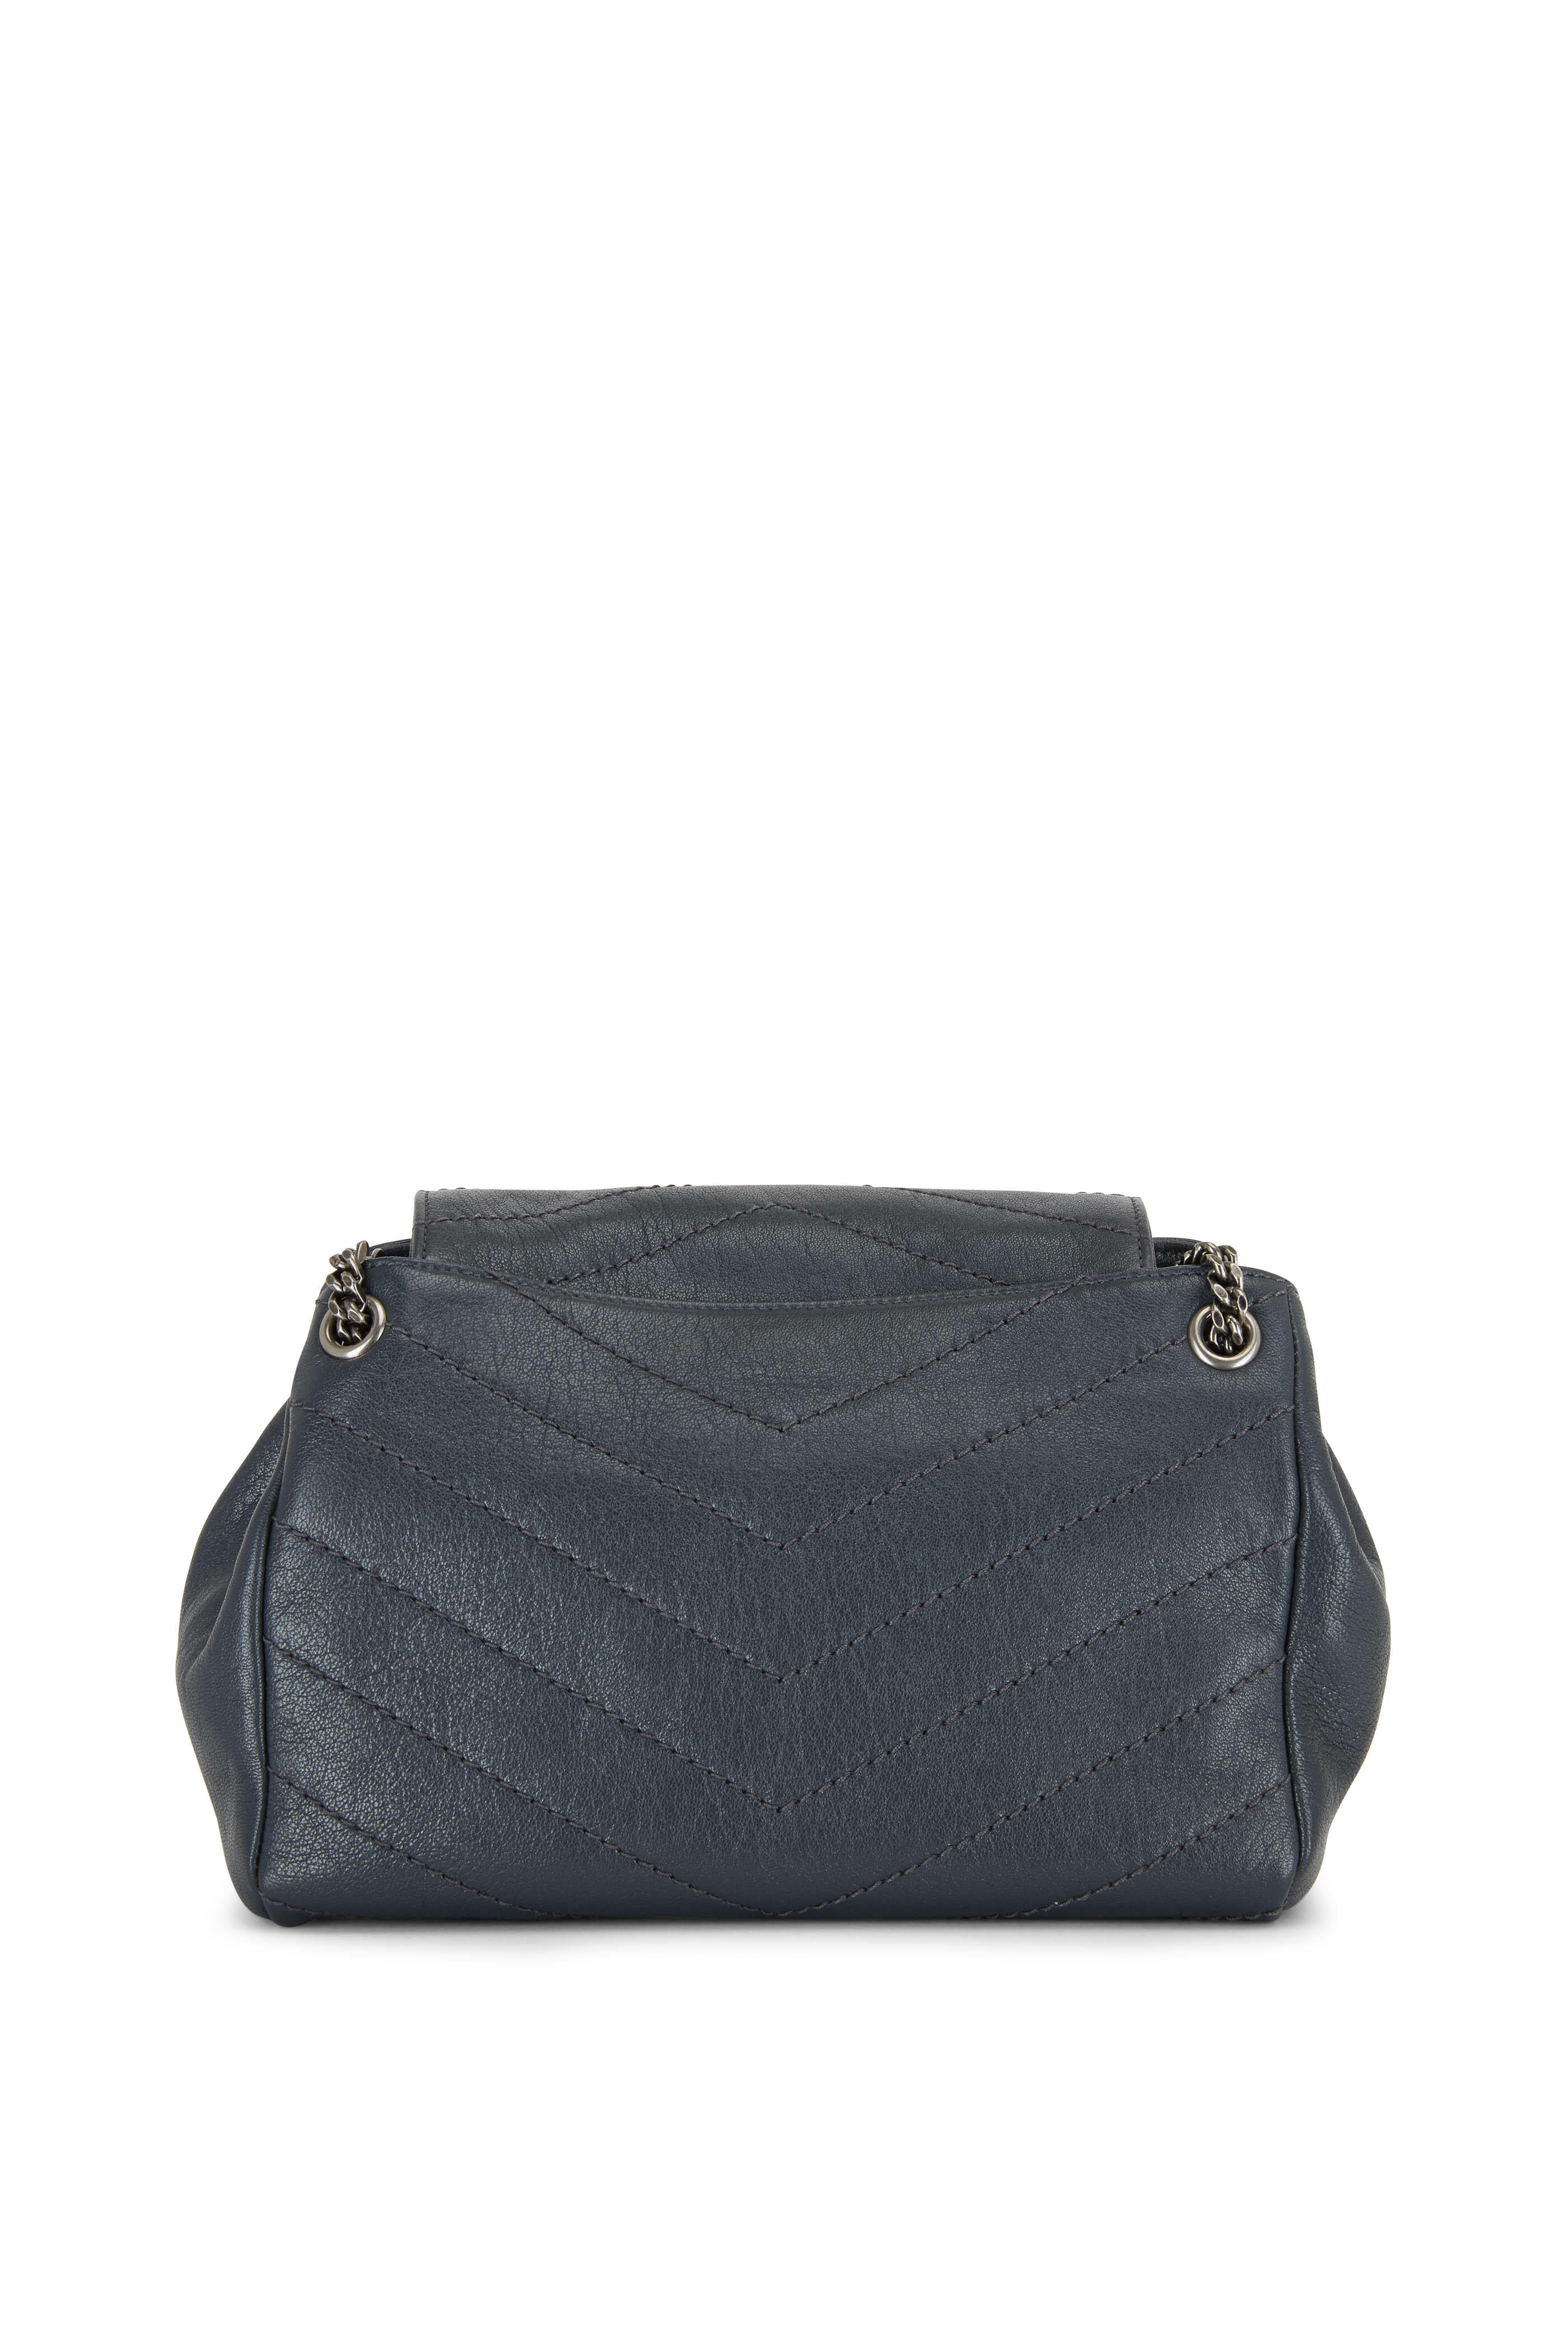 Saint Laurent Monogram Nolita Shoulder Bag - Black Shoulder Bags, Handbags  - SNT288465